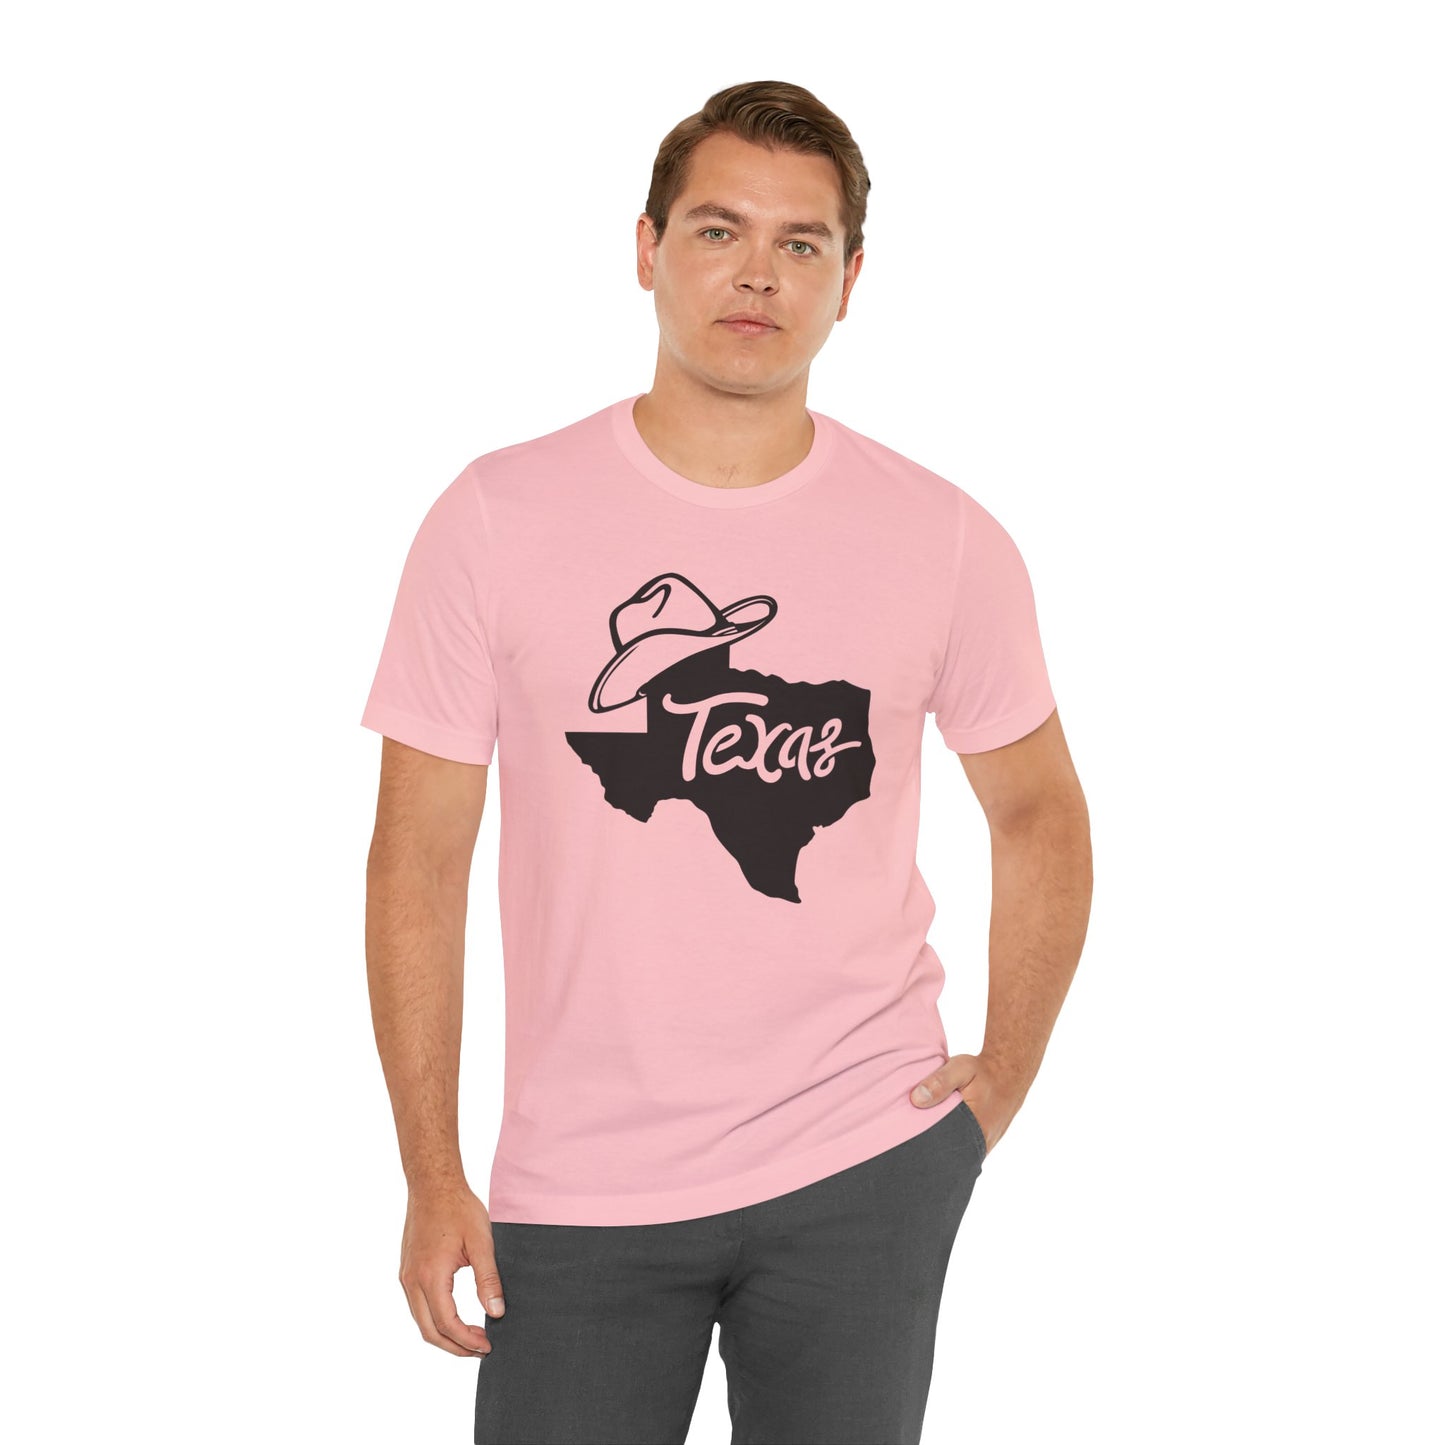 Camiseta unisex con sombrero de vaquero de Texas